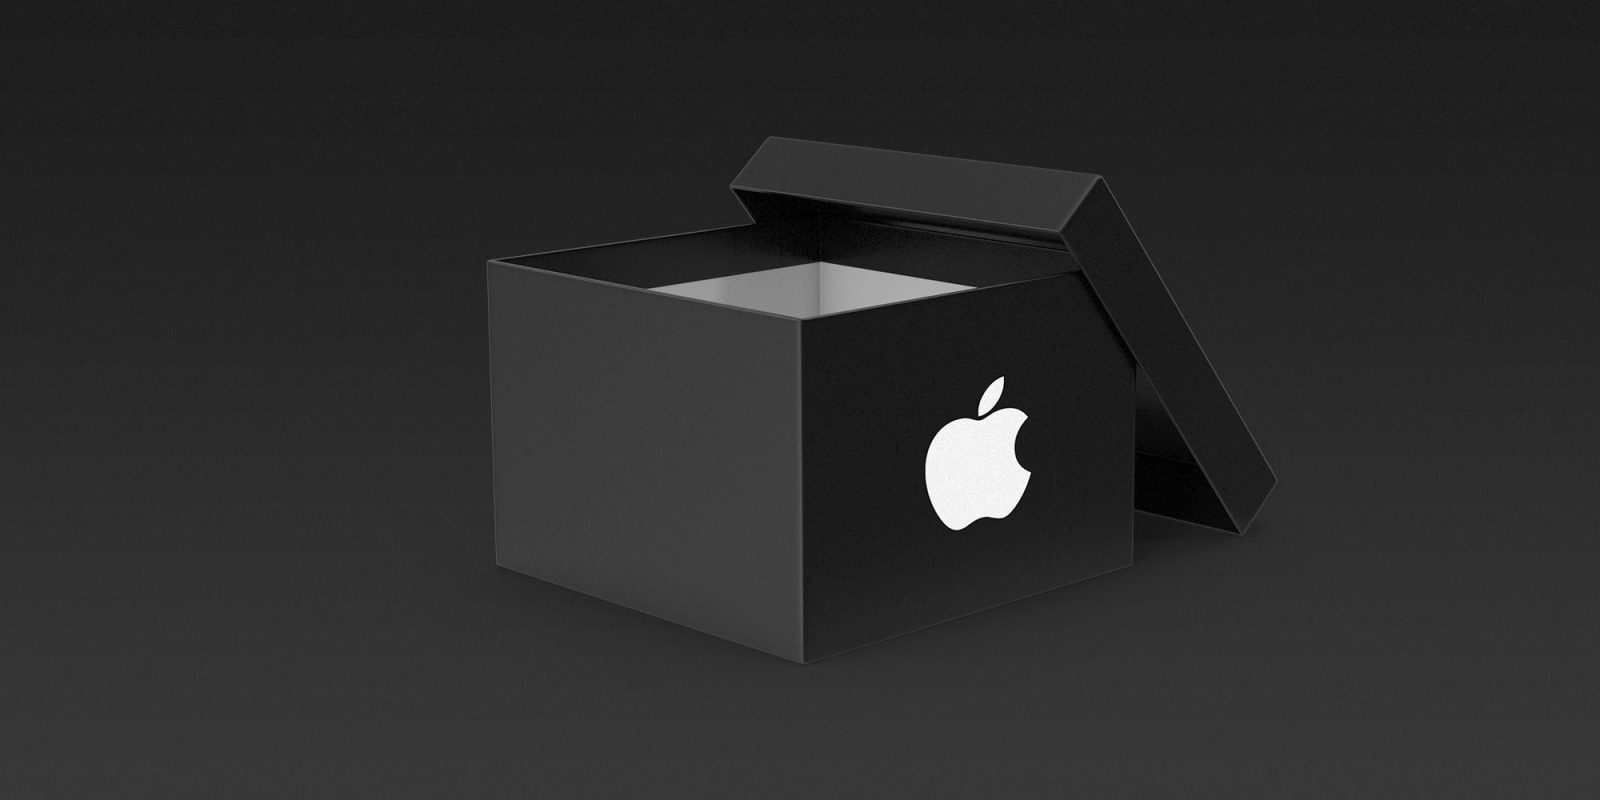 AAPL investors | Black box with Apple logo on it image